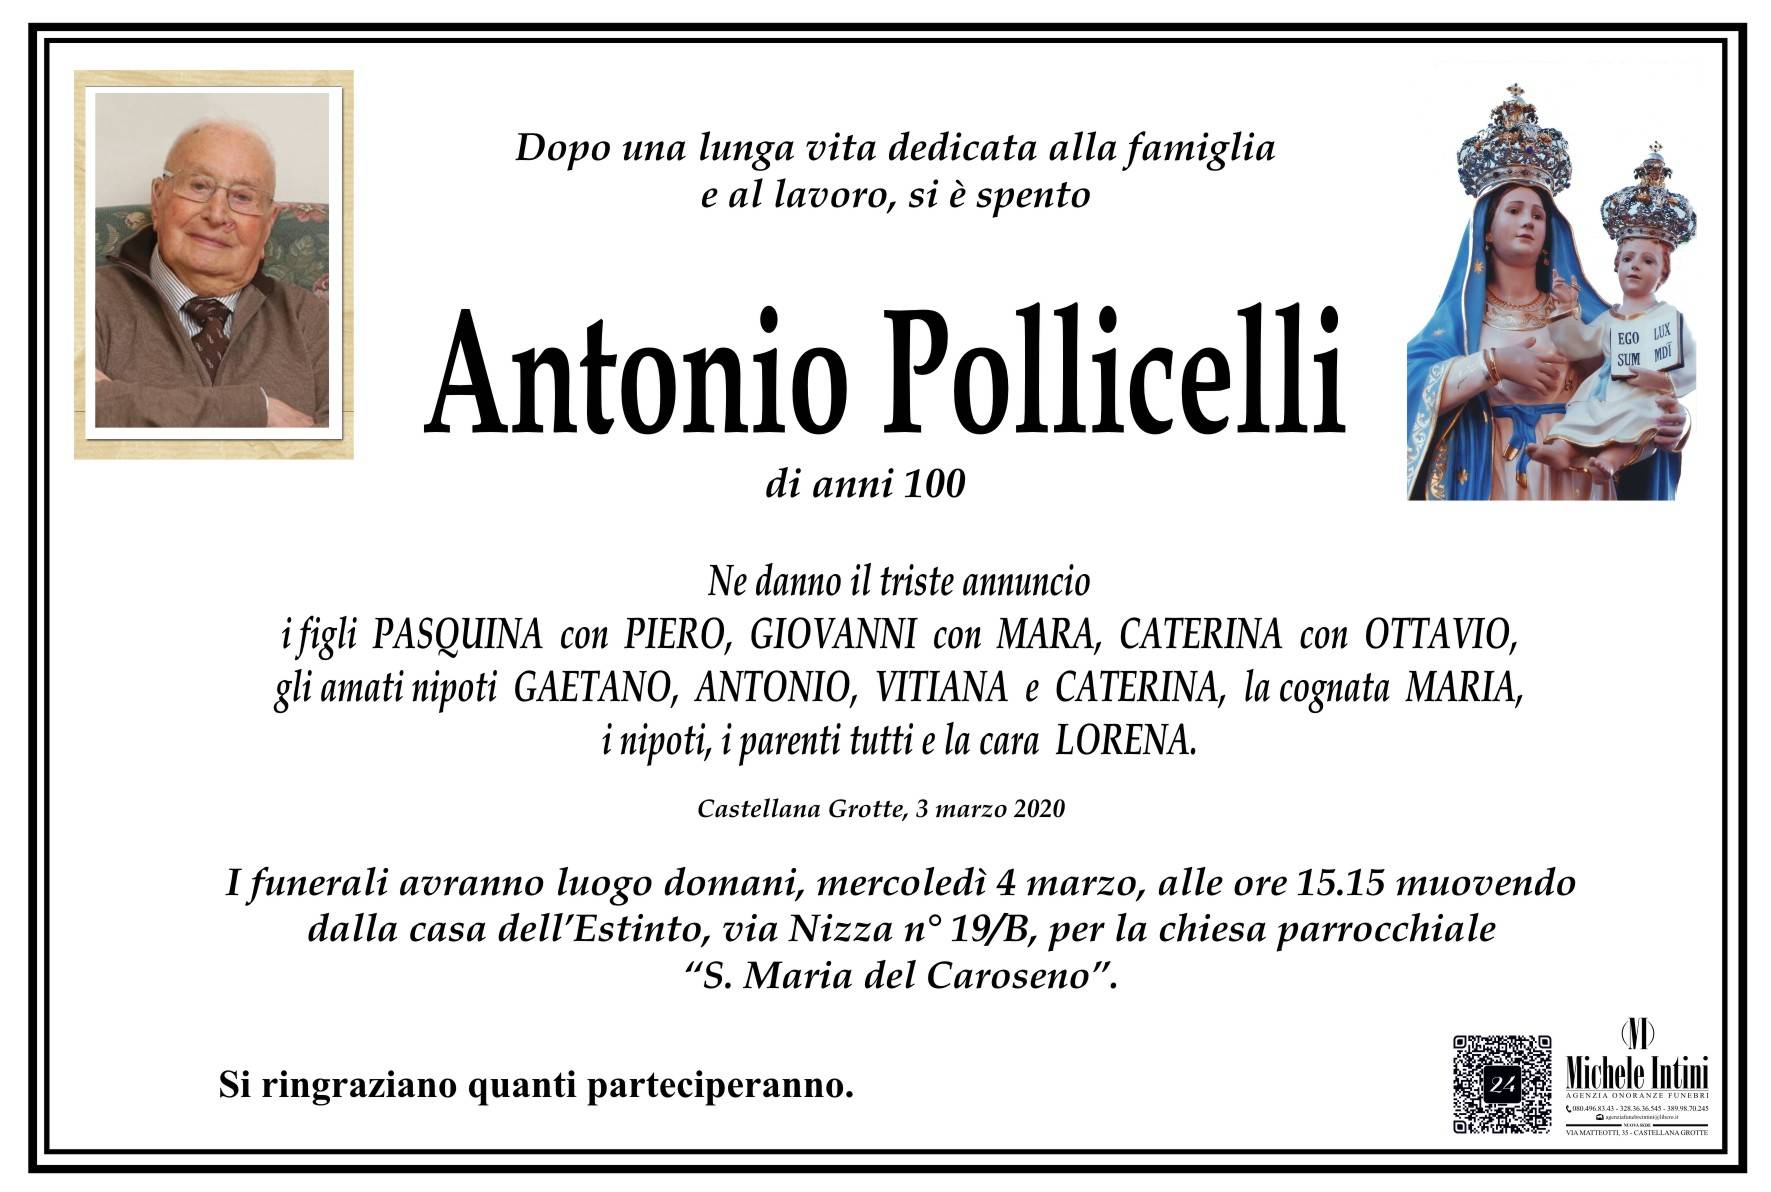 Antonio Pollicelli